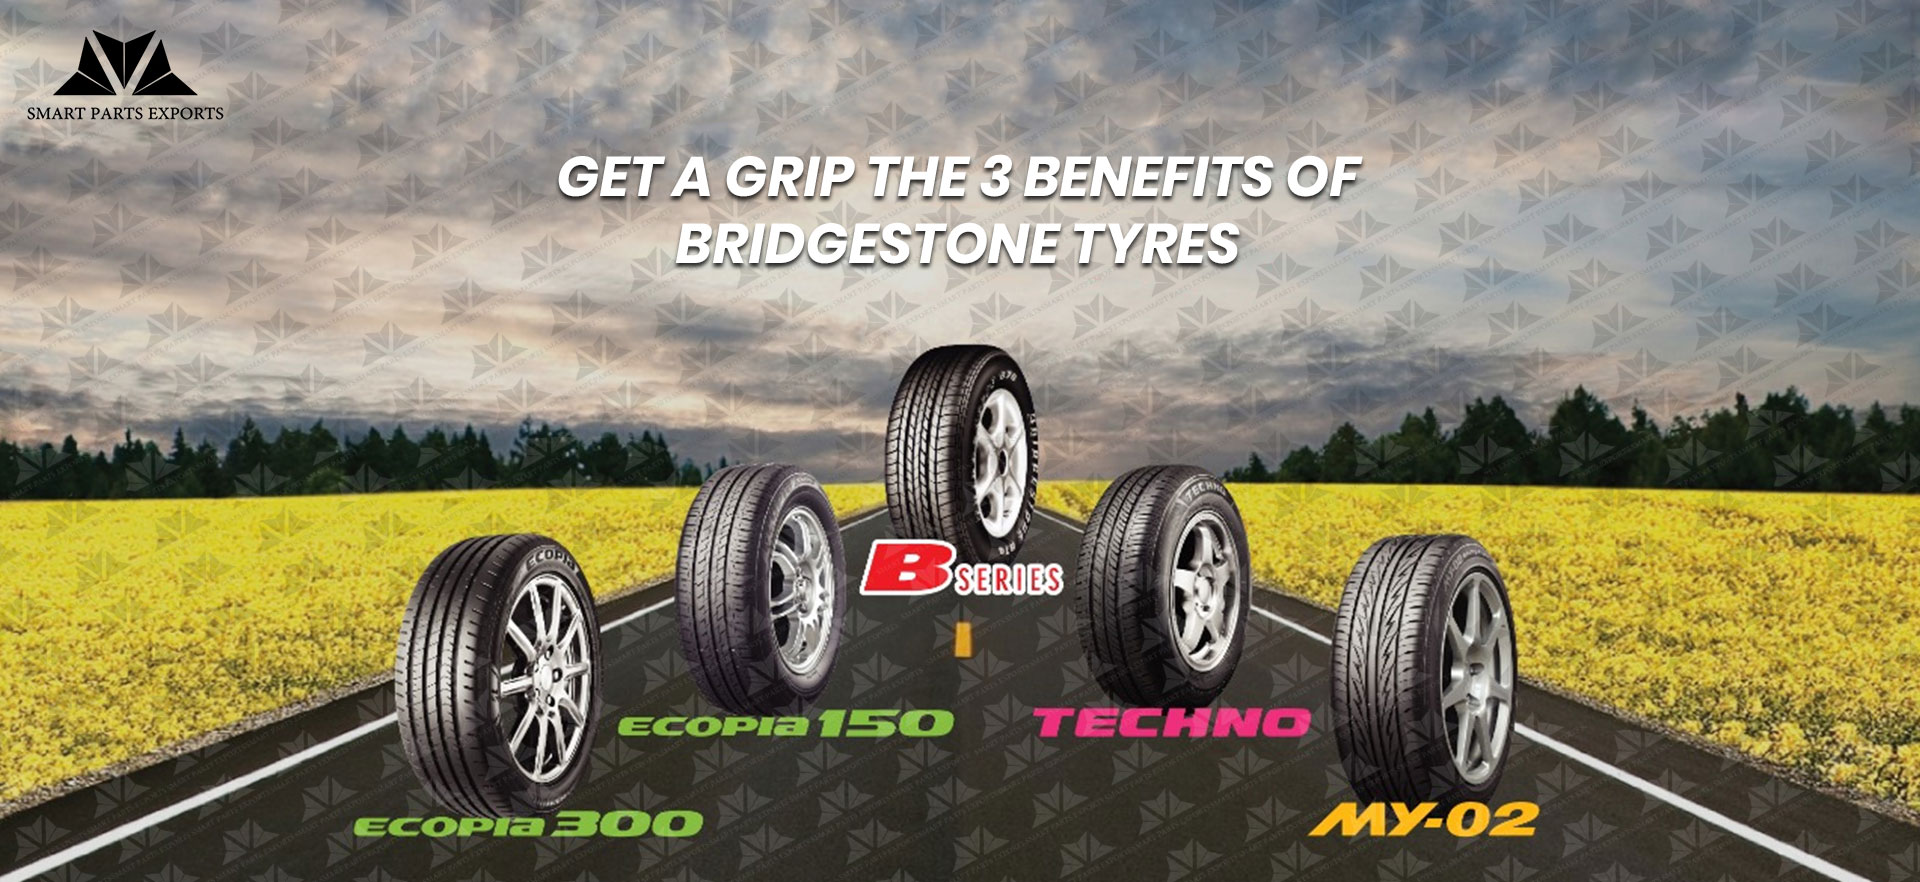 Bridgestone Genuine Bike, Car & SUV Tyres Exporter